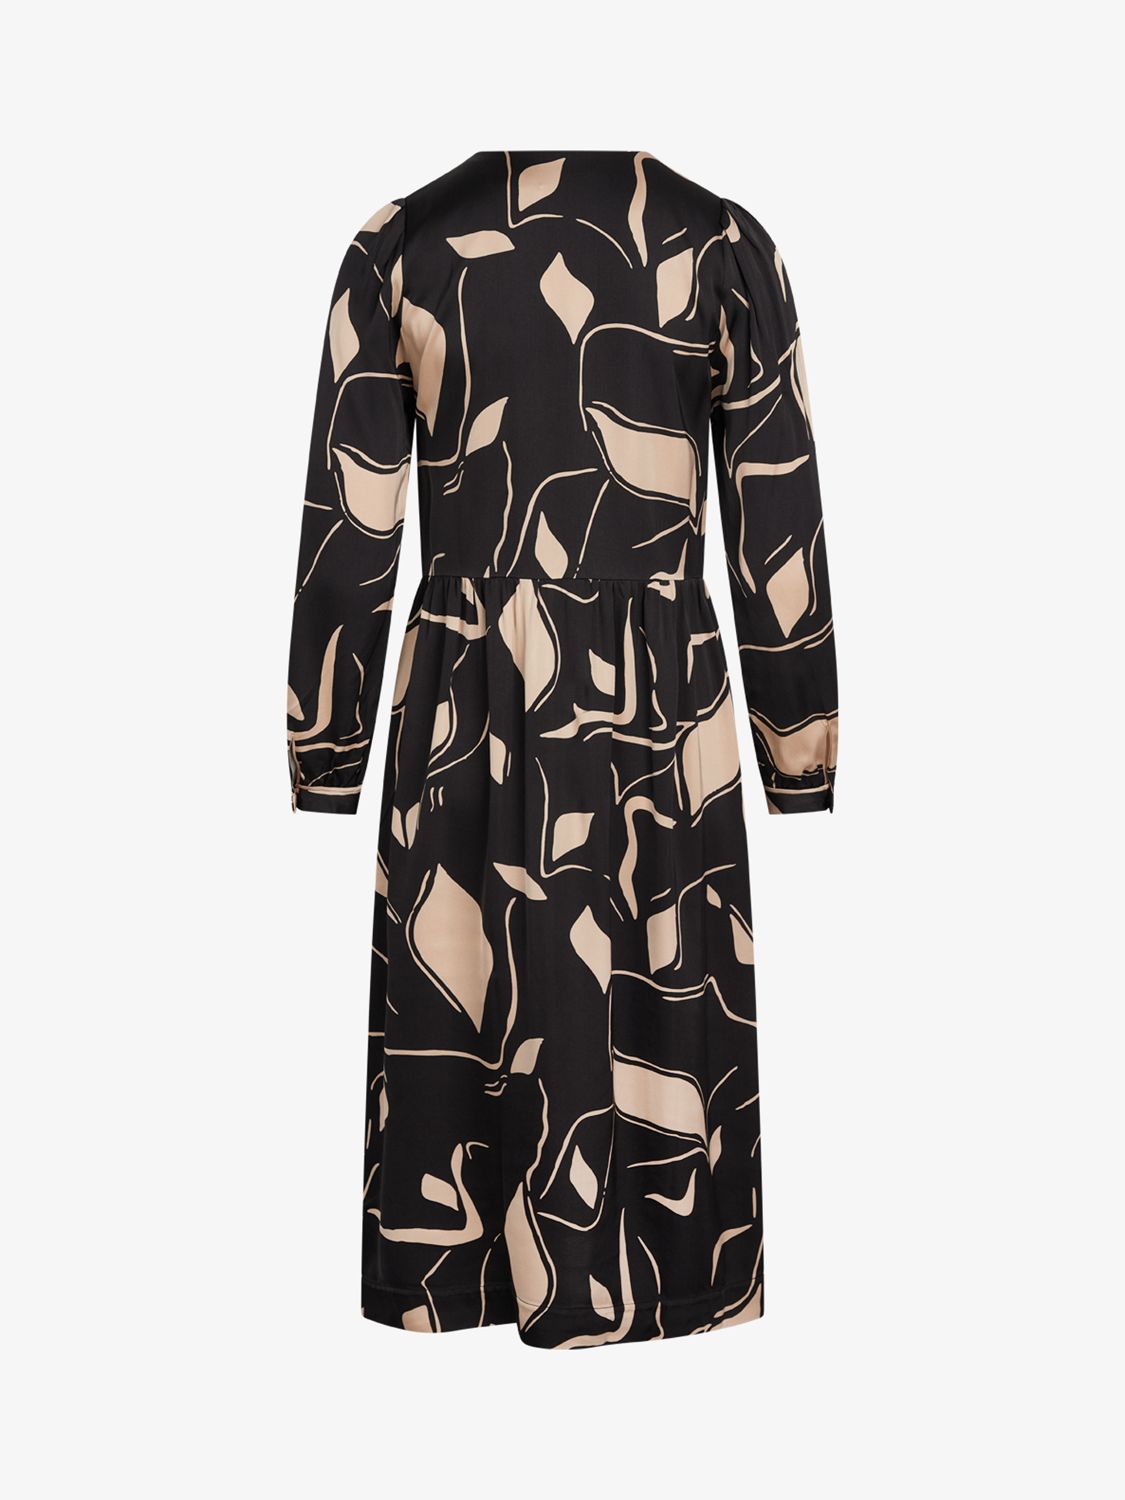 Noa Noa Sianna Abstract Print Midi Dress, Beige/Black, 10